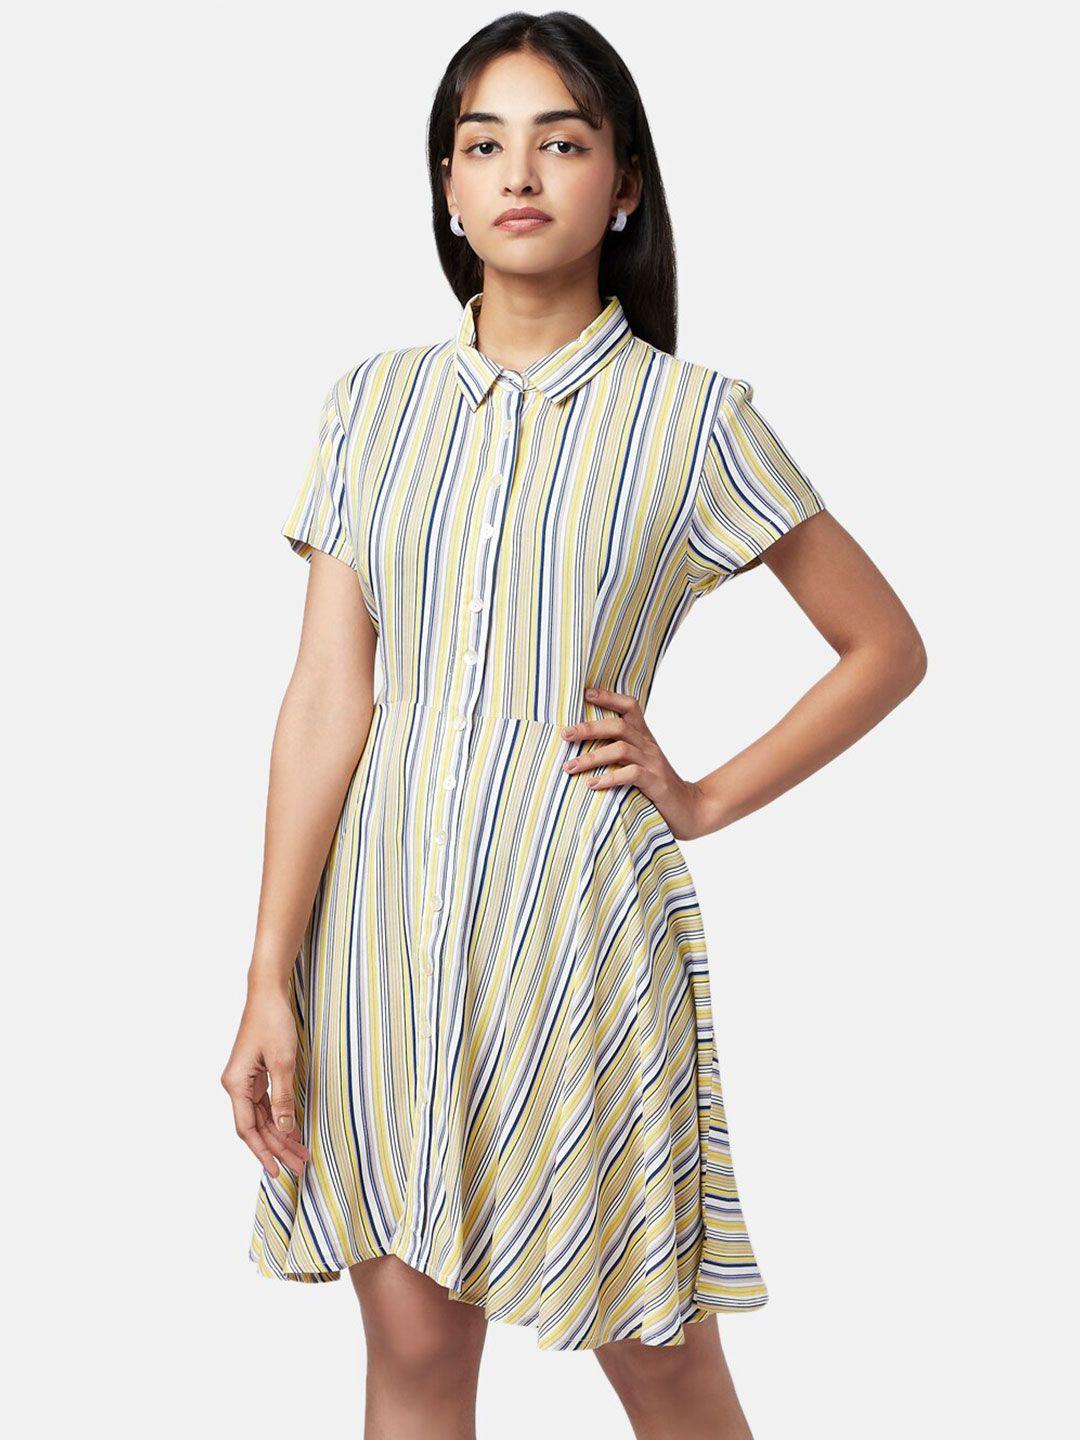 yu by pantaloons yellow & blue striped shirt dress